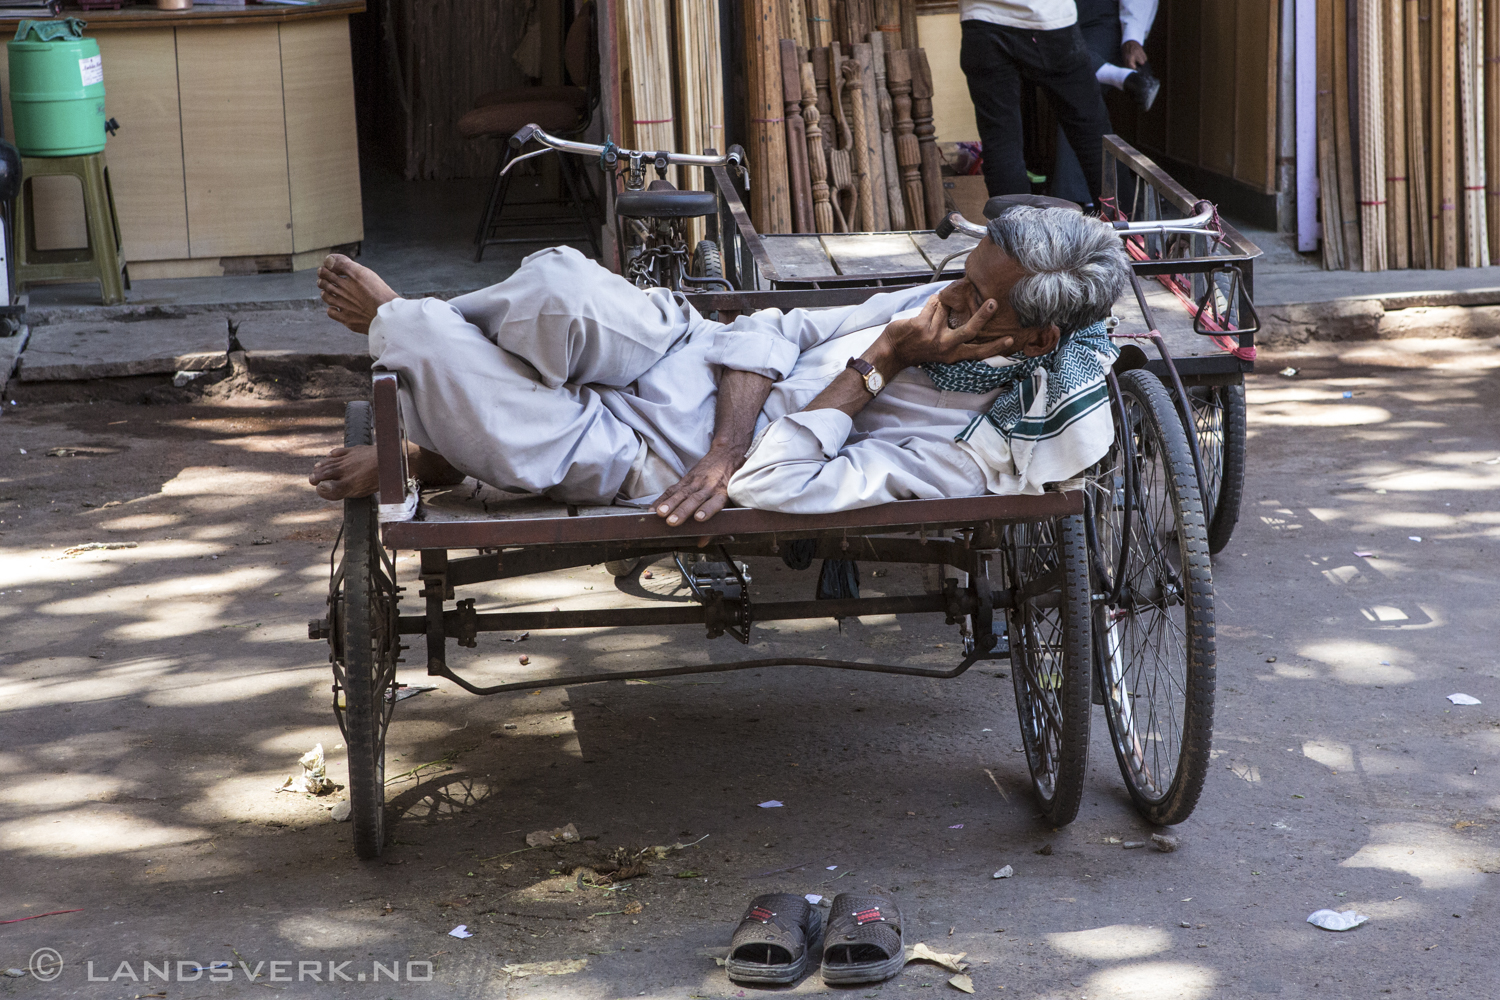 Jaipur, India. 

(Canon EOS 5D Mark III / Canon EF 24-70mm f/2.8 L USM)